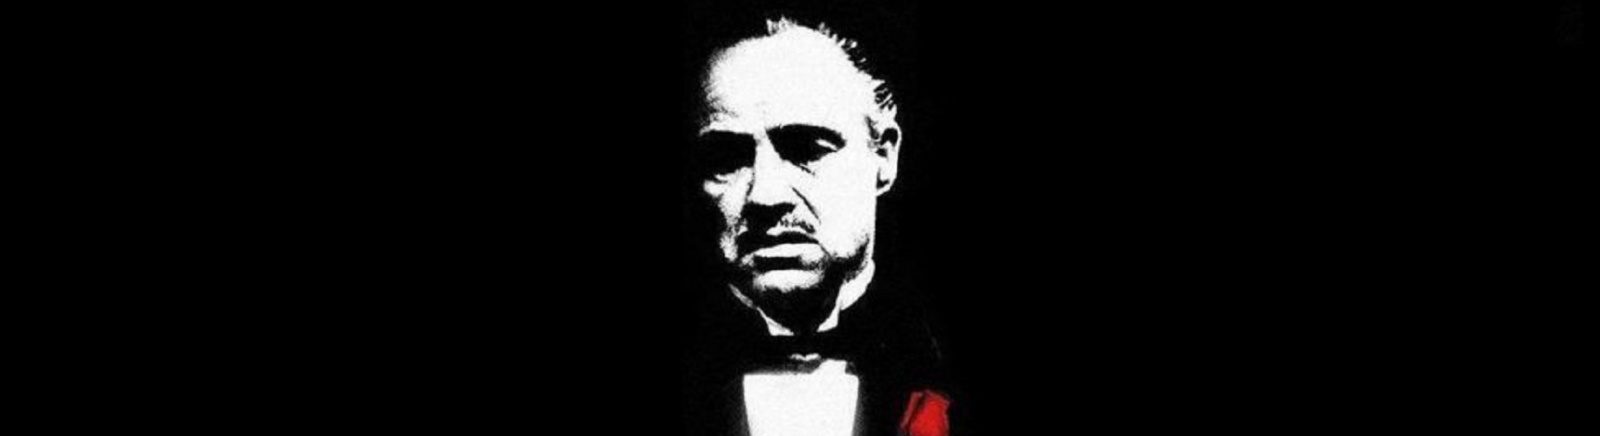 Дата выхода The Godfather: The Game (Godfather)  на PC, PS3 и PS2 в России и во всем мире